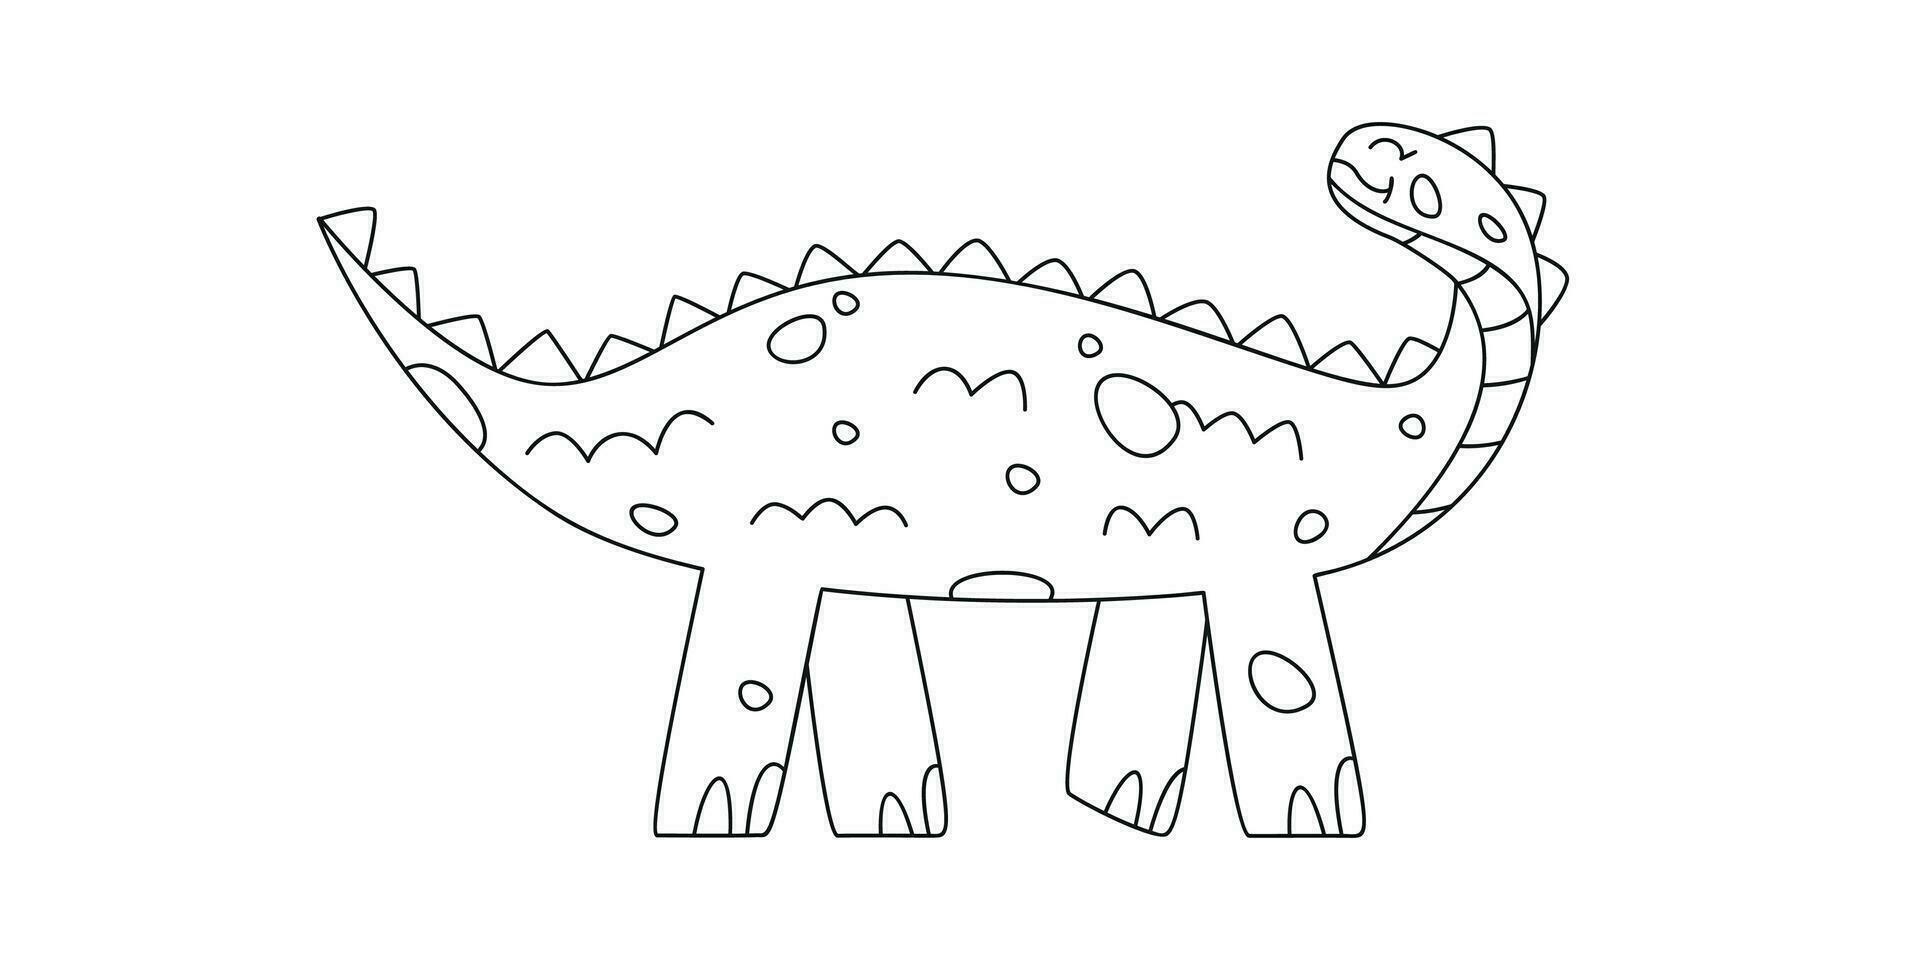 mano dibujado lineal vector ilustración de escelidosaurio dinosaurio